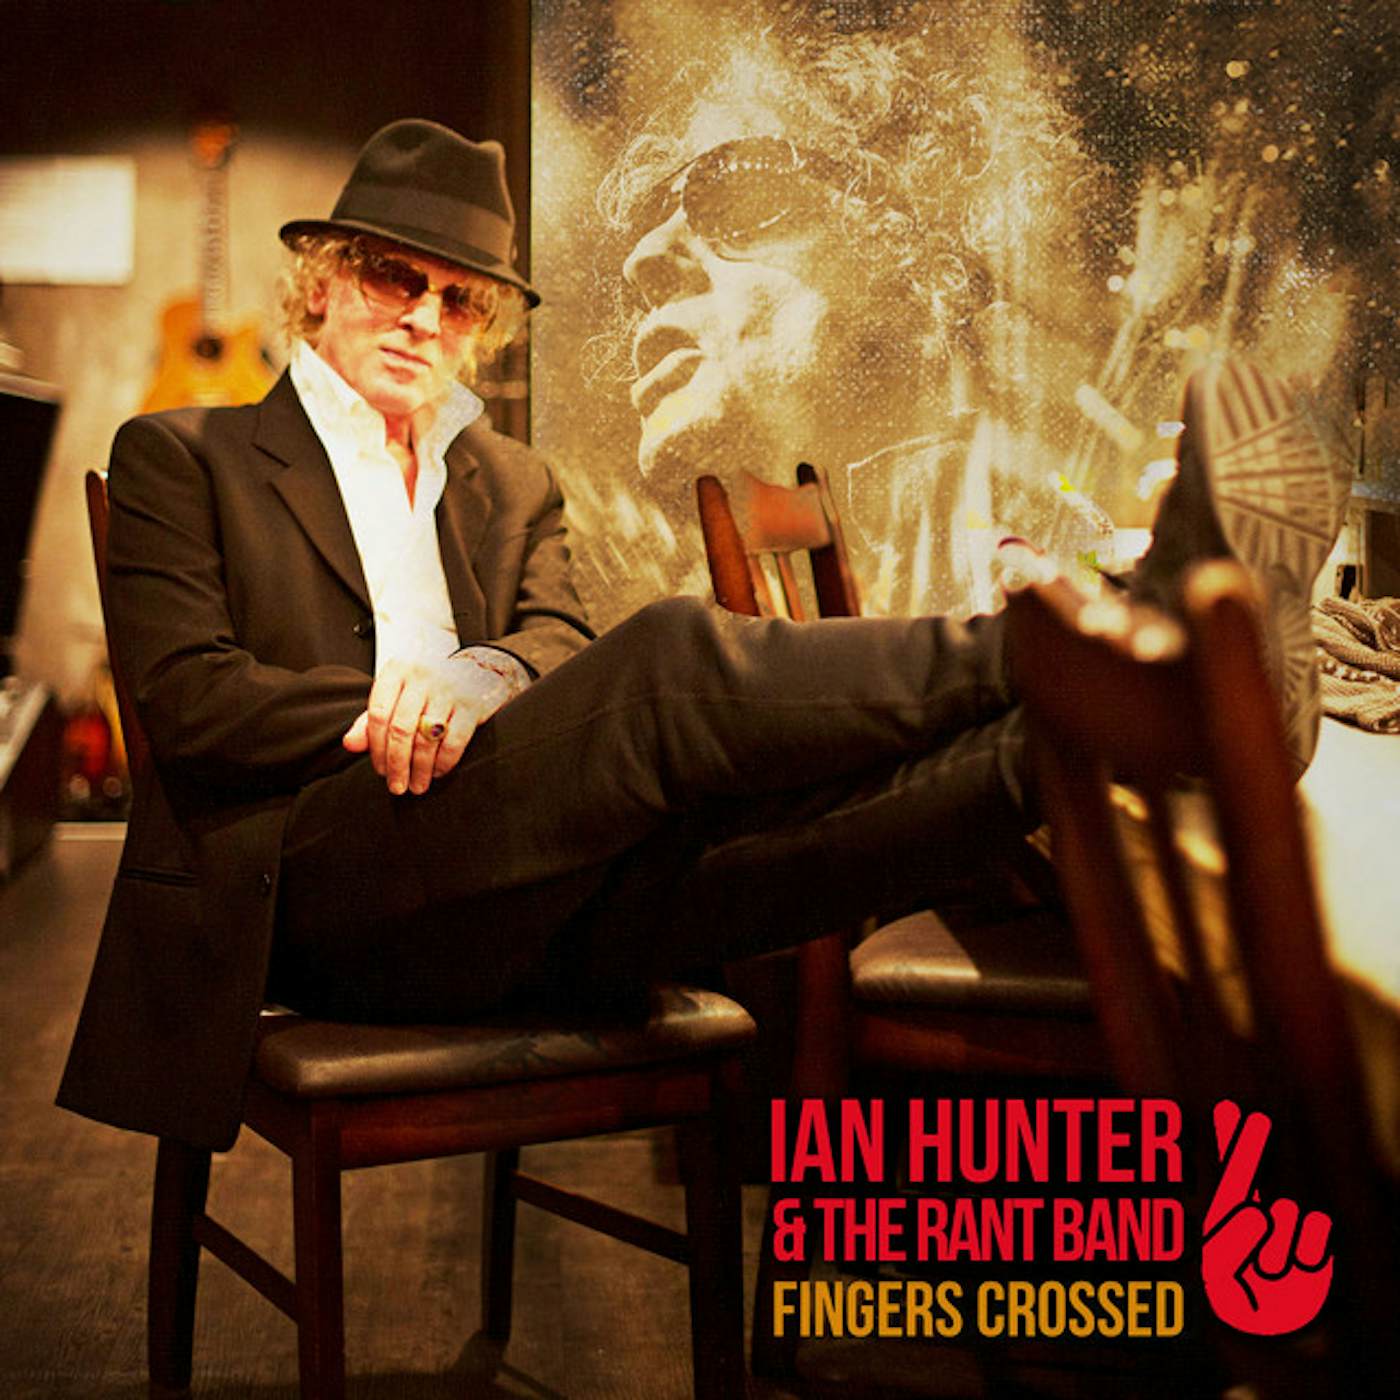 Ian Hunter FINGERS CROSSED CD